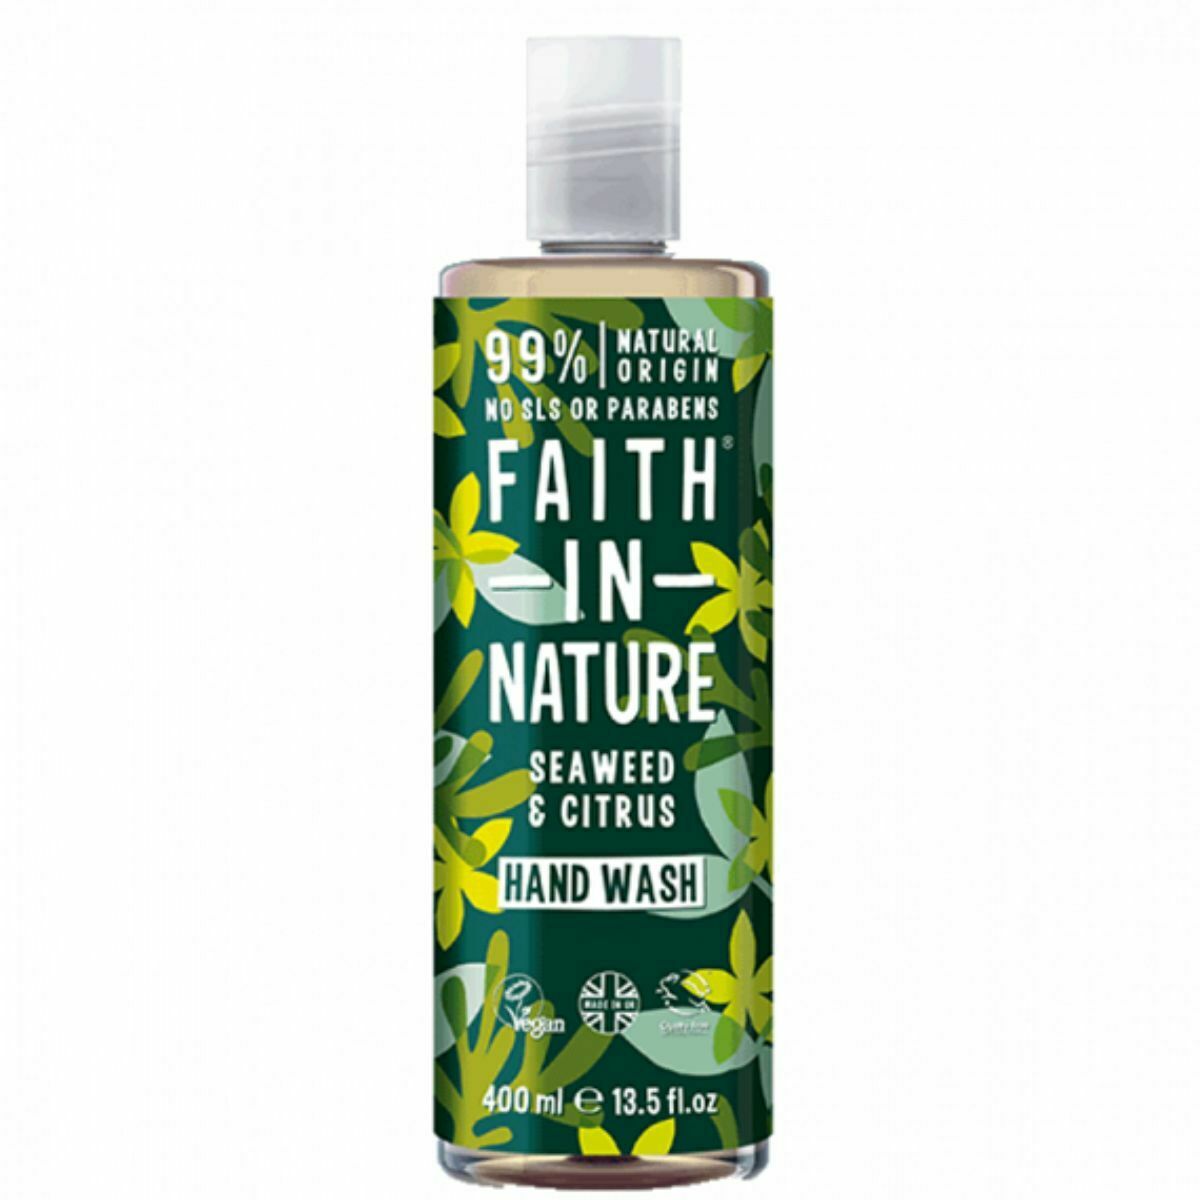 Faith in Nature Antibakteriální tekuté mýdlo Mořská řasa & Citrus (Hand Wash) 400 ml